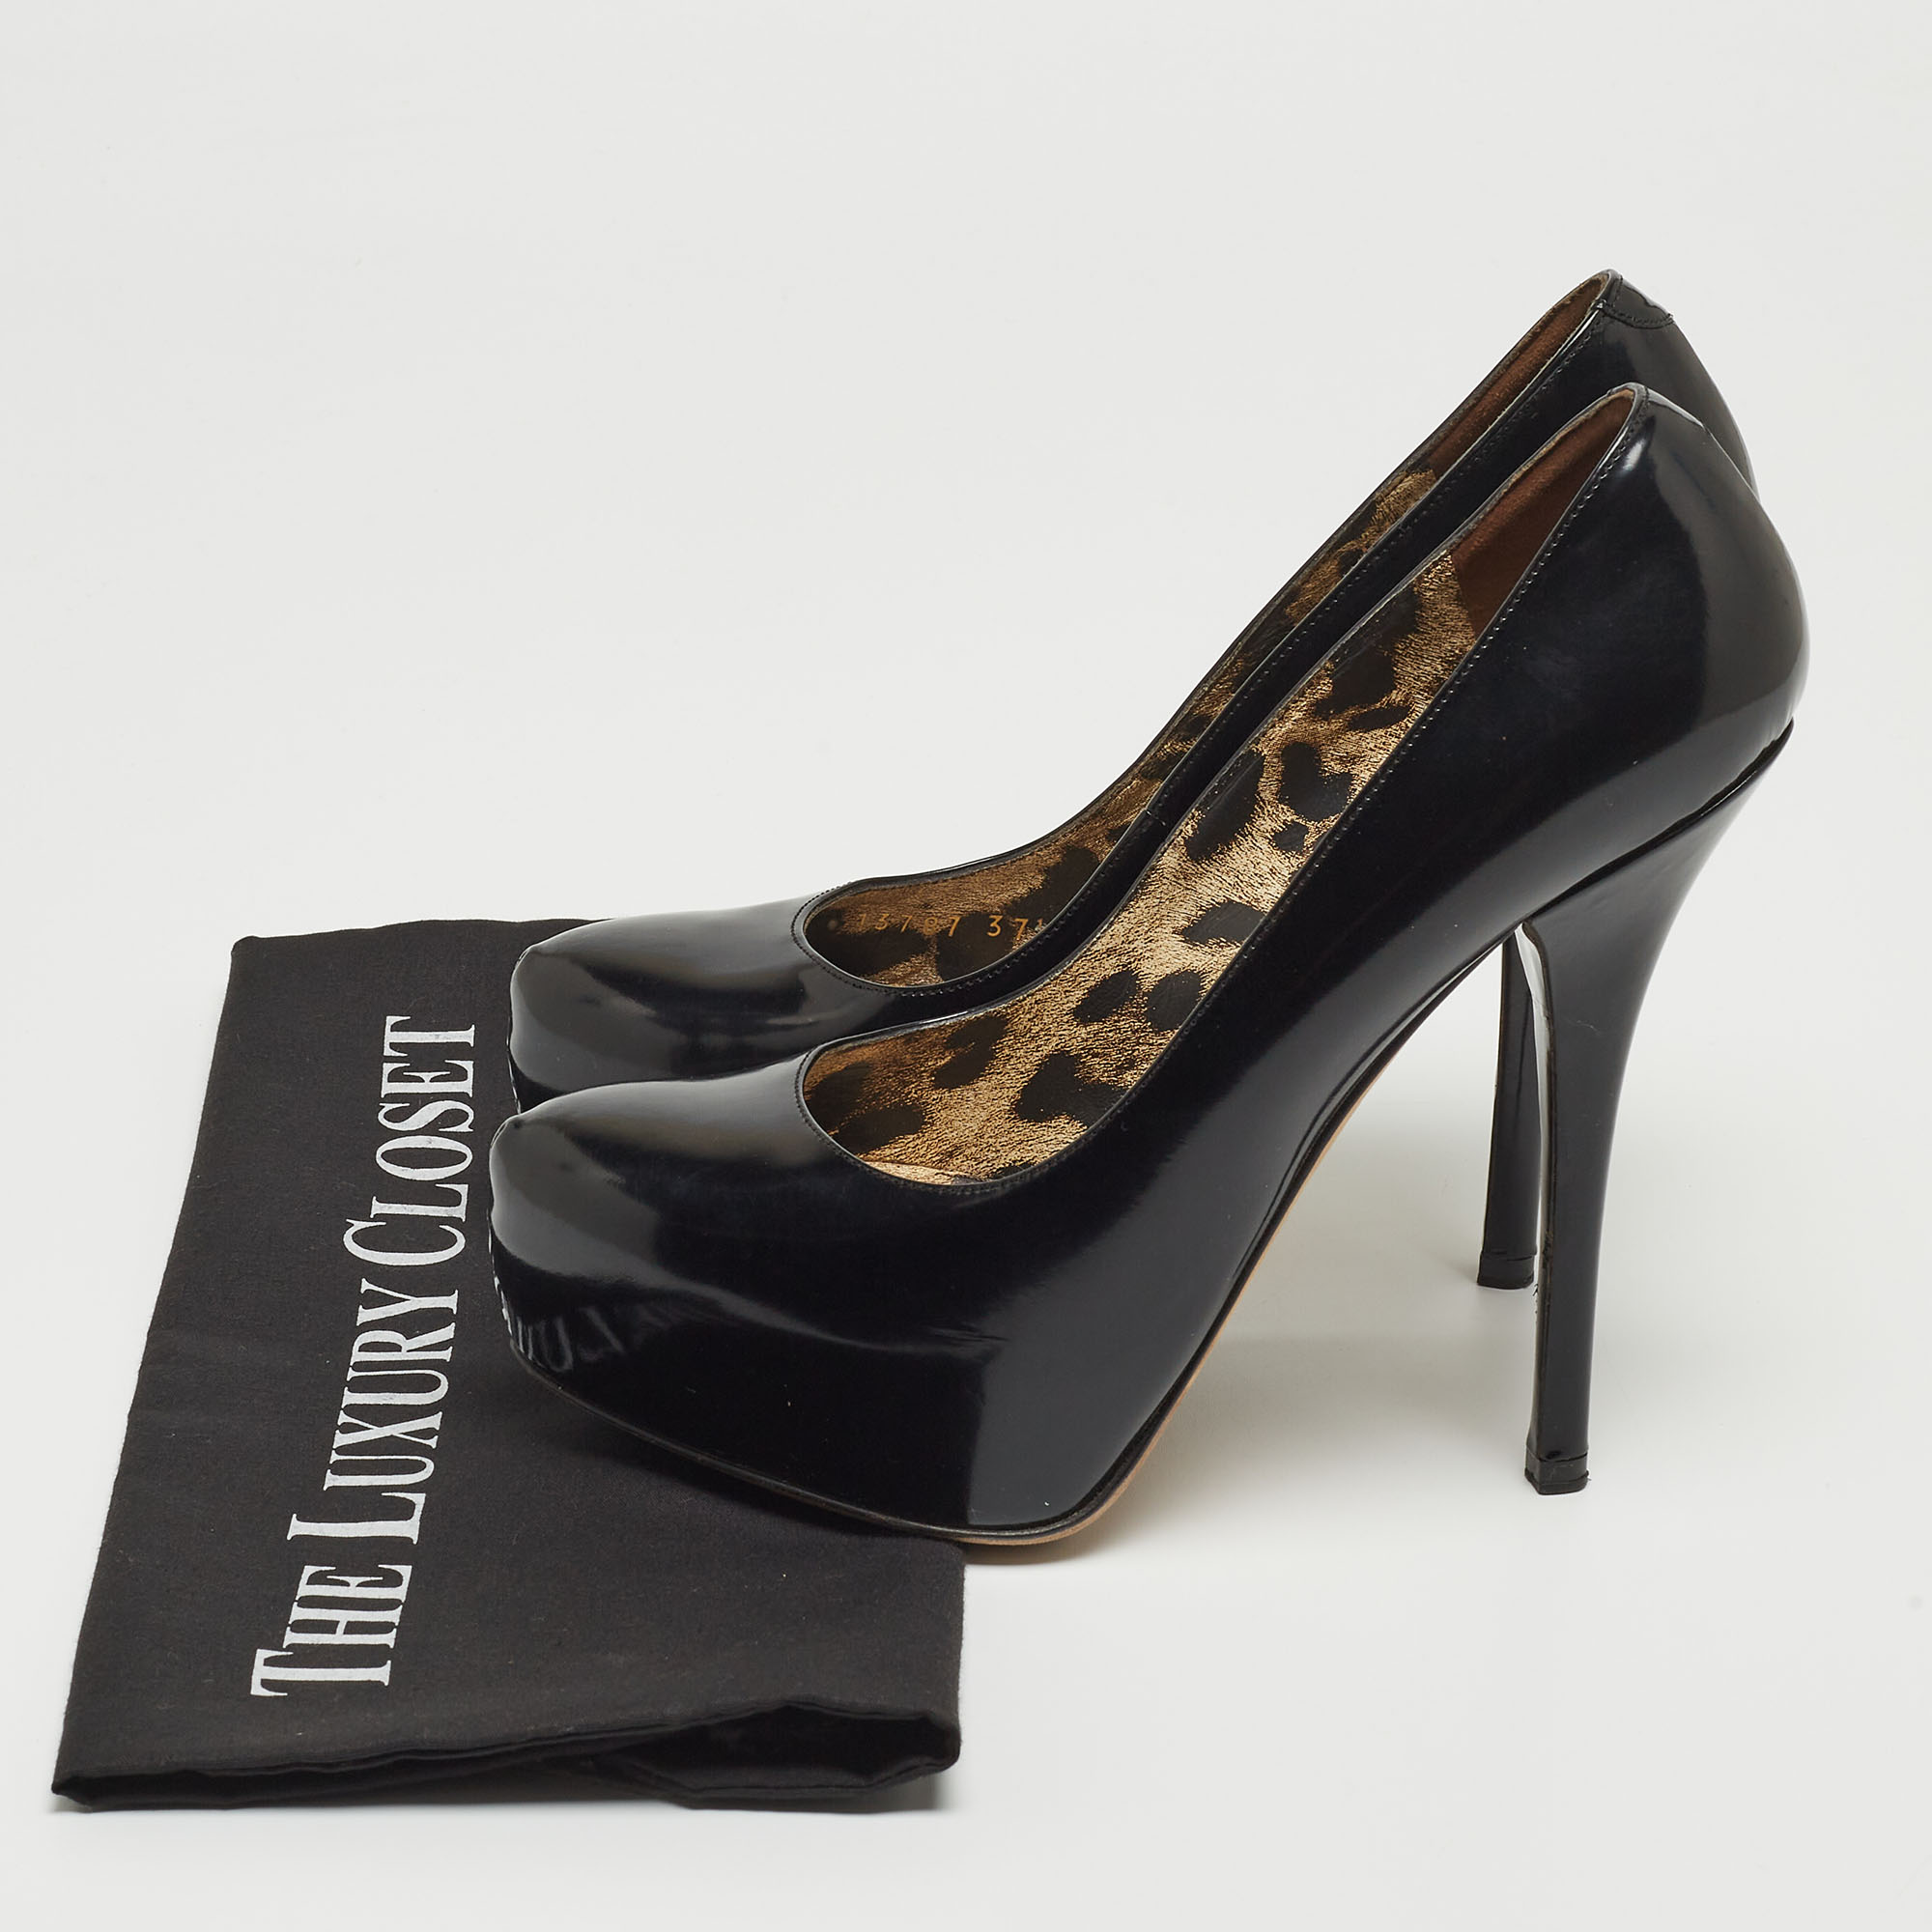 Dolce & Gabbana Black Patent Leather Platform Pumps Size 37.5